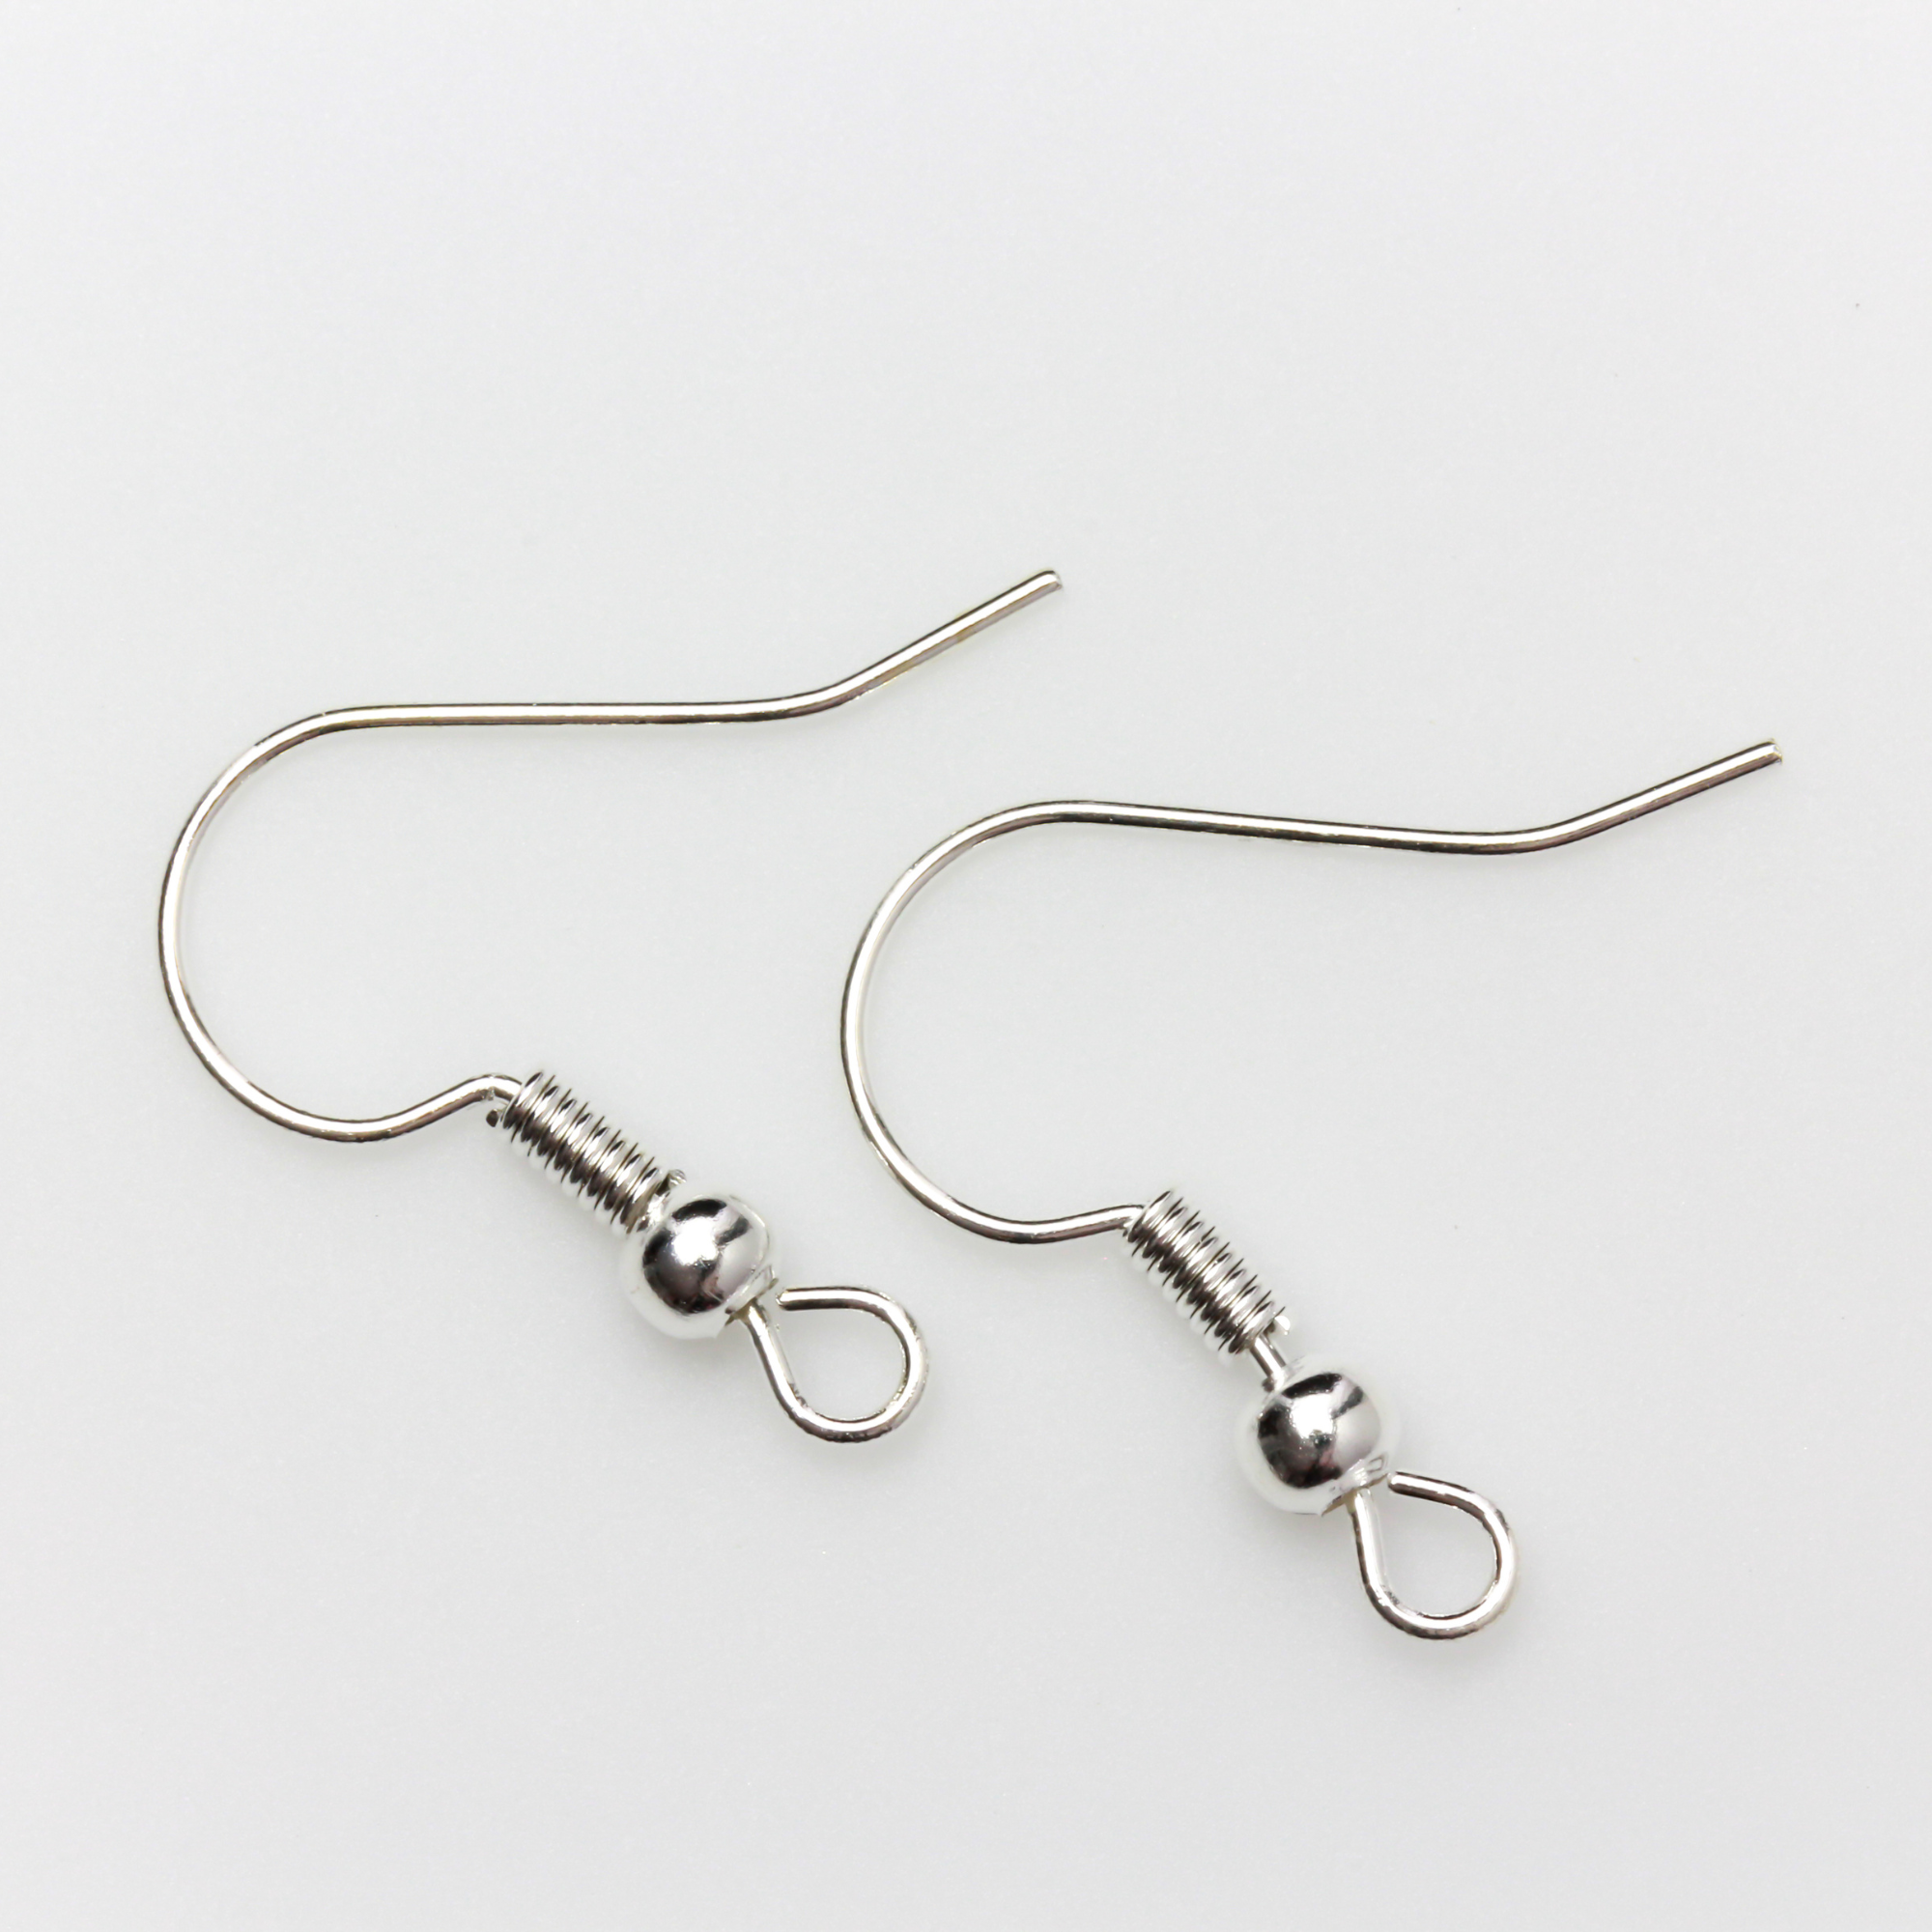 30 Pairs of Silver Large Loop 316L Stainless Steel Earring Hooks